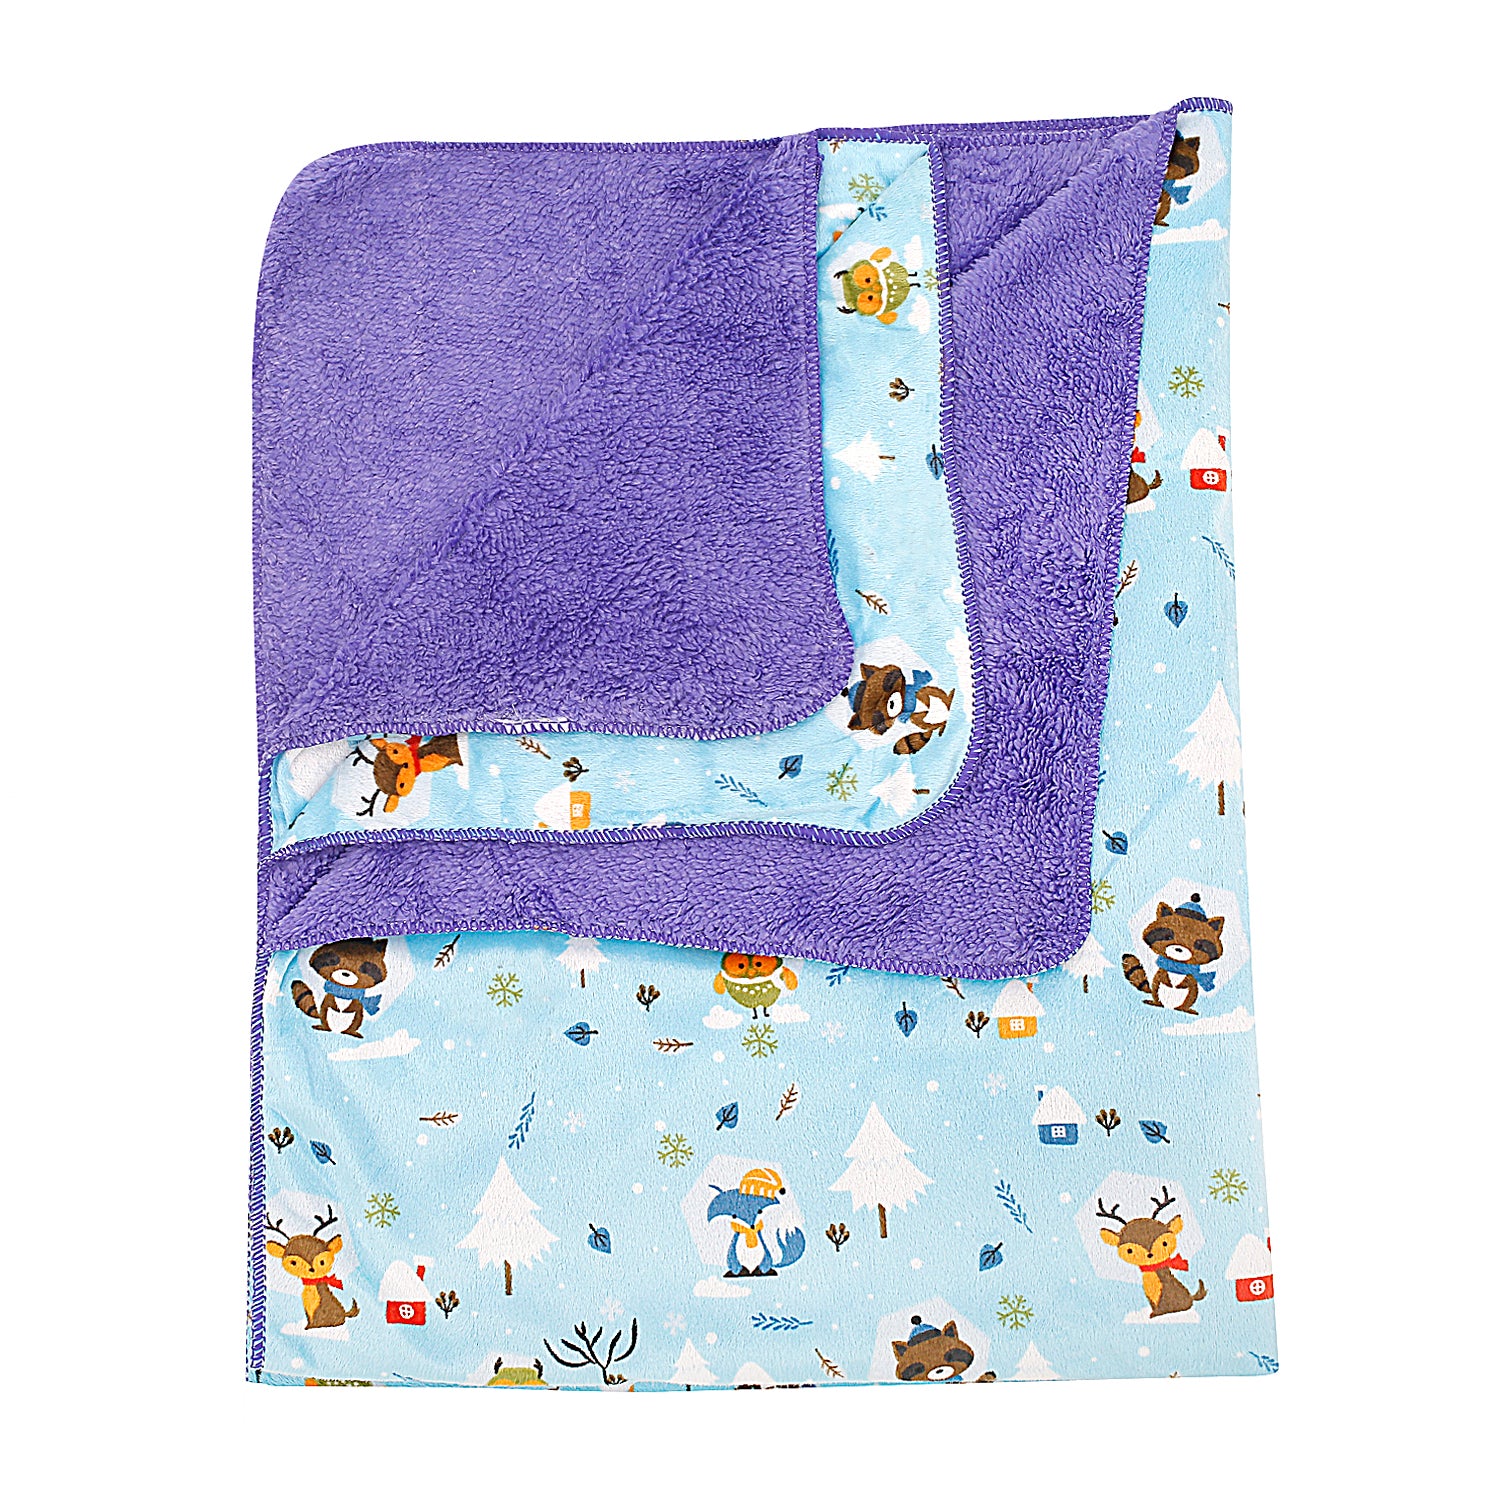 Winter Wonderland Purple And Blue Blanket